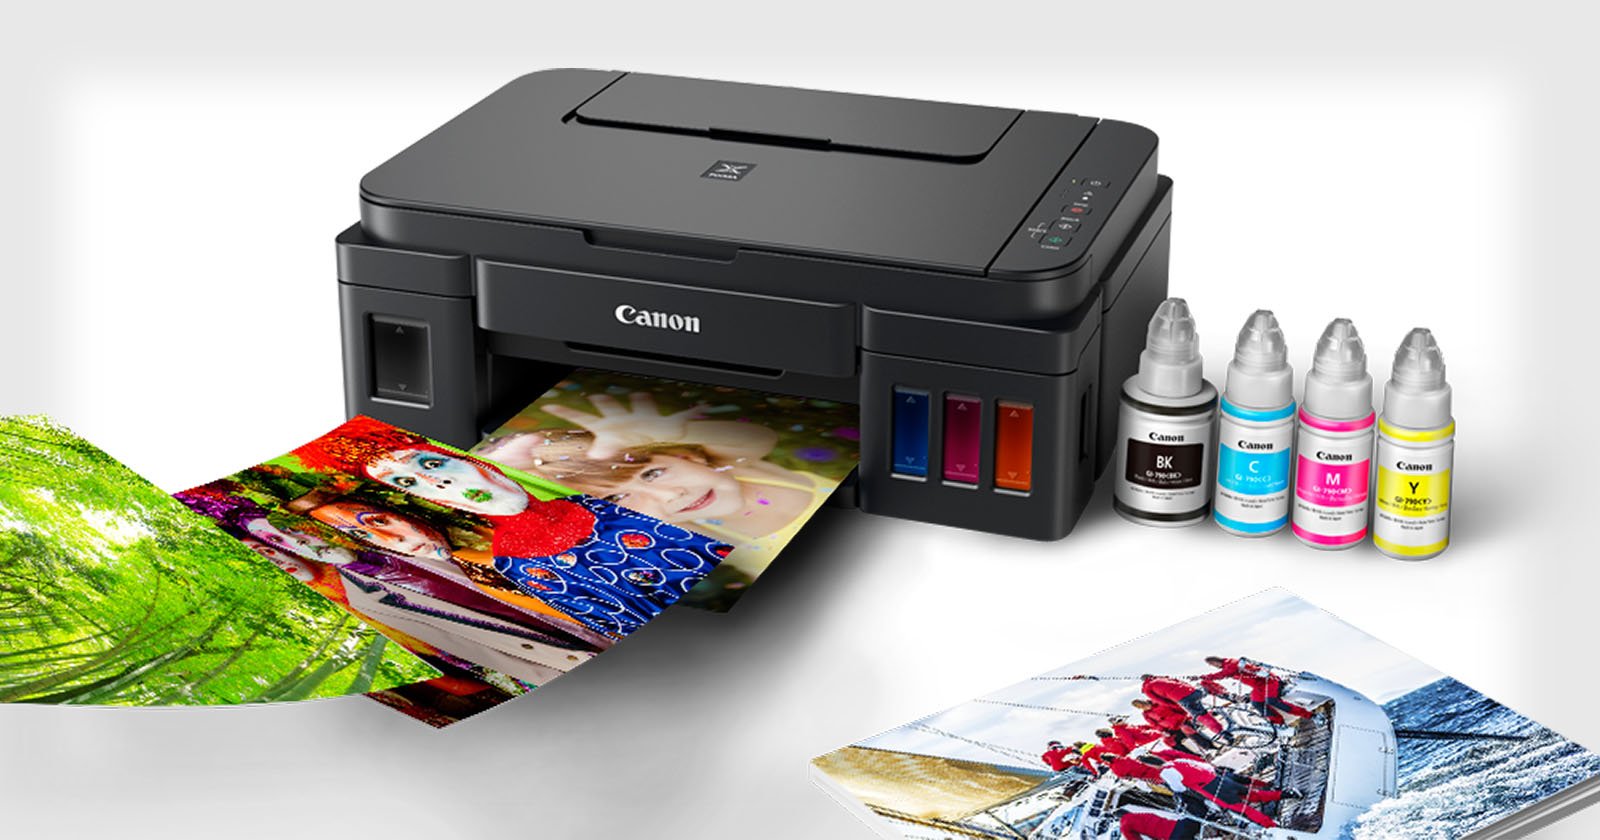 Canon G-Series MegaTank Printers Use Refillable Ink Tanks, Not